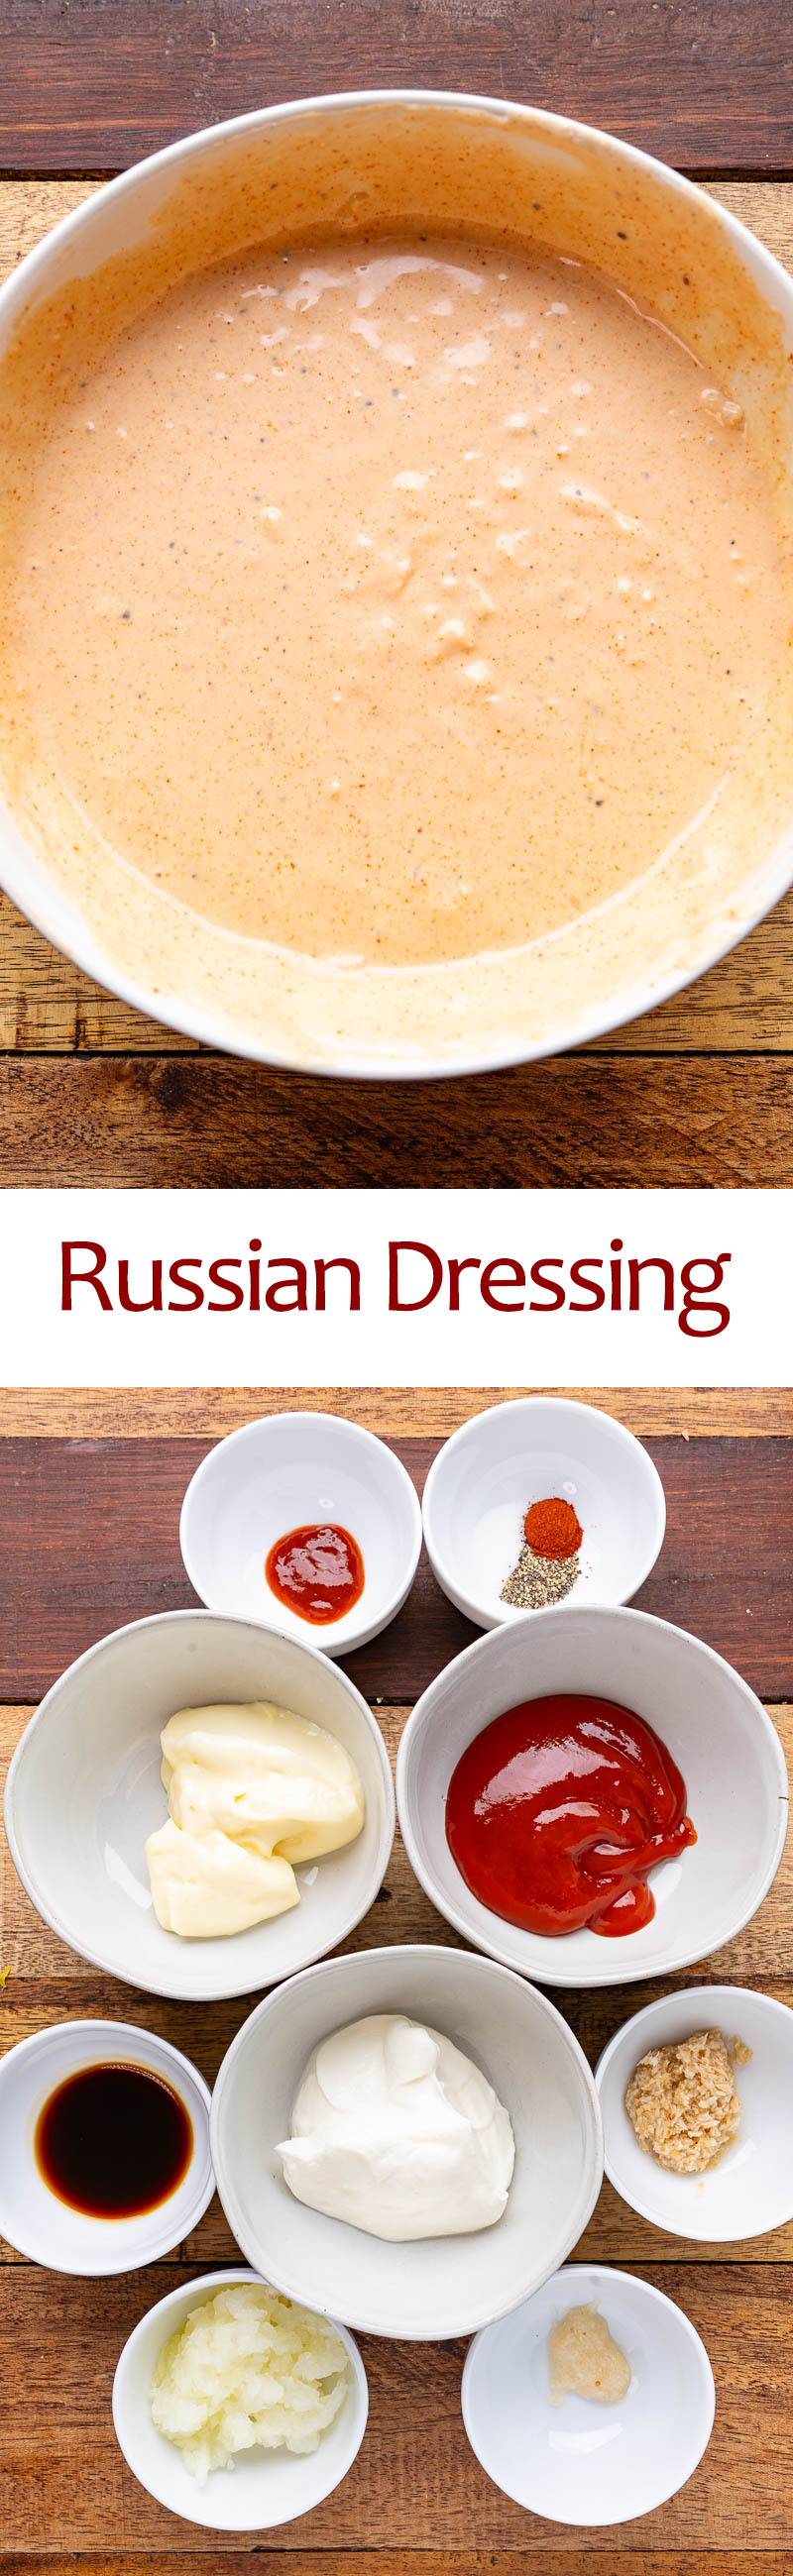 Russian Dressing